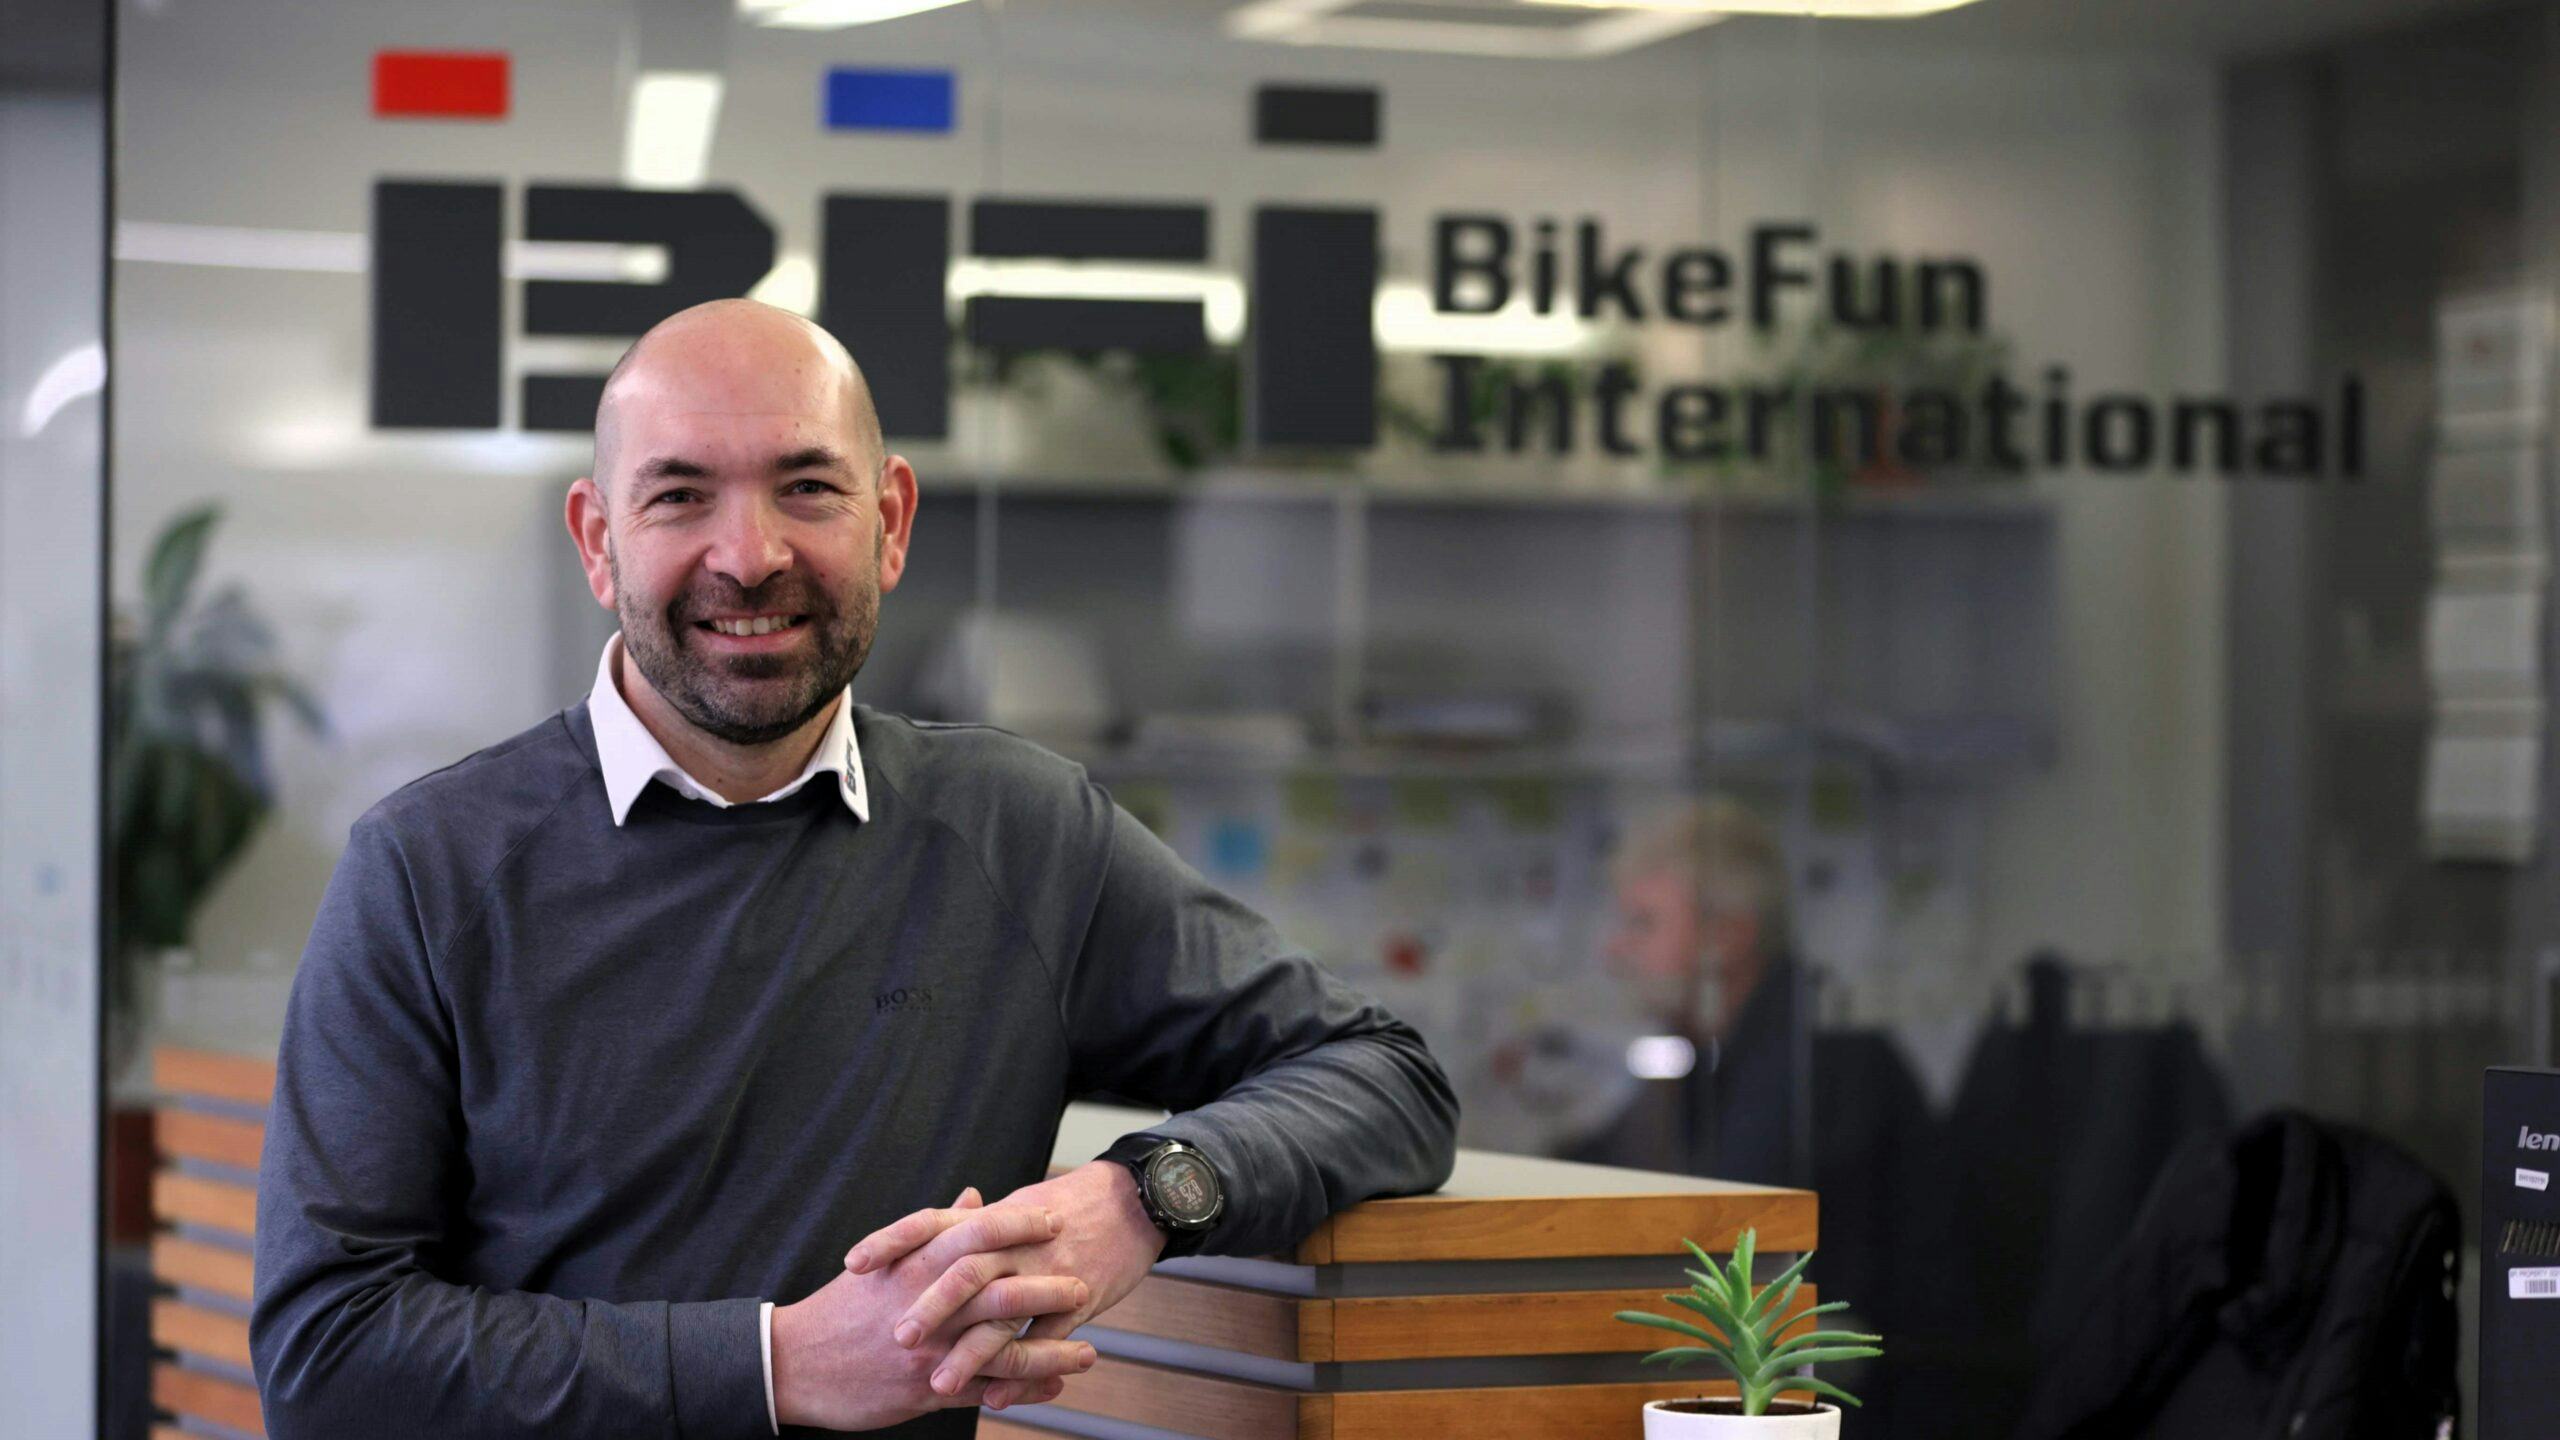 René Gasser appointed as CEO of Bike Fun International. – Photo BFI